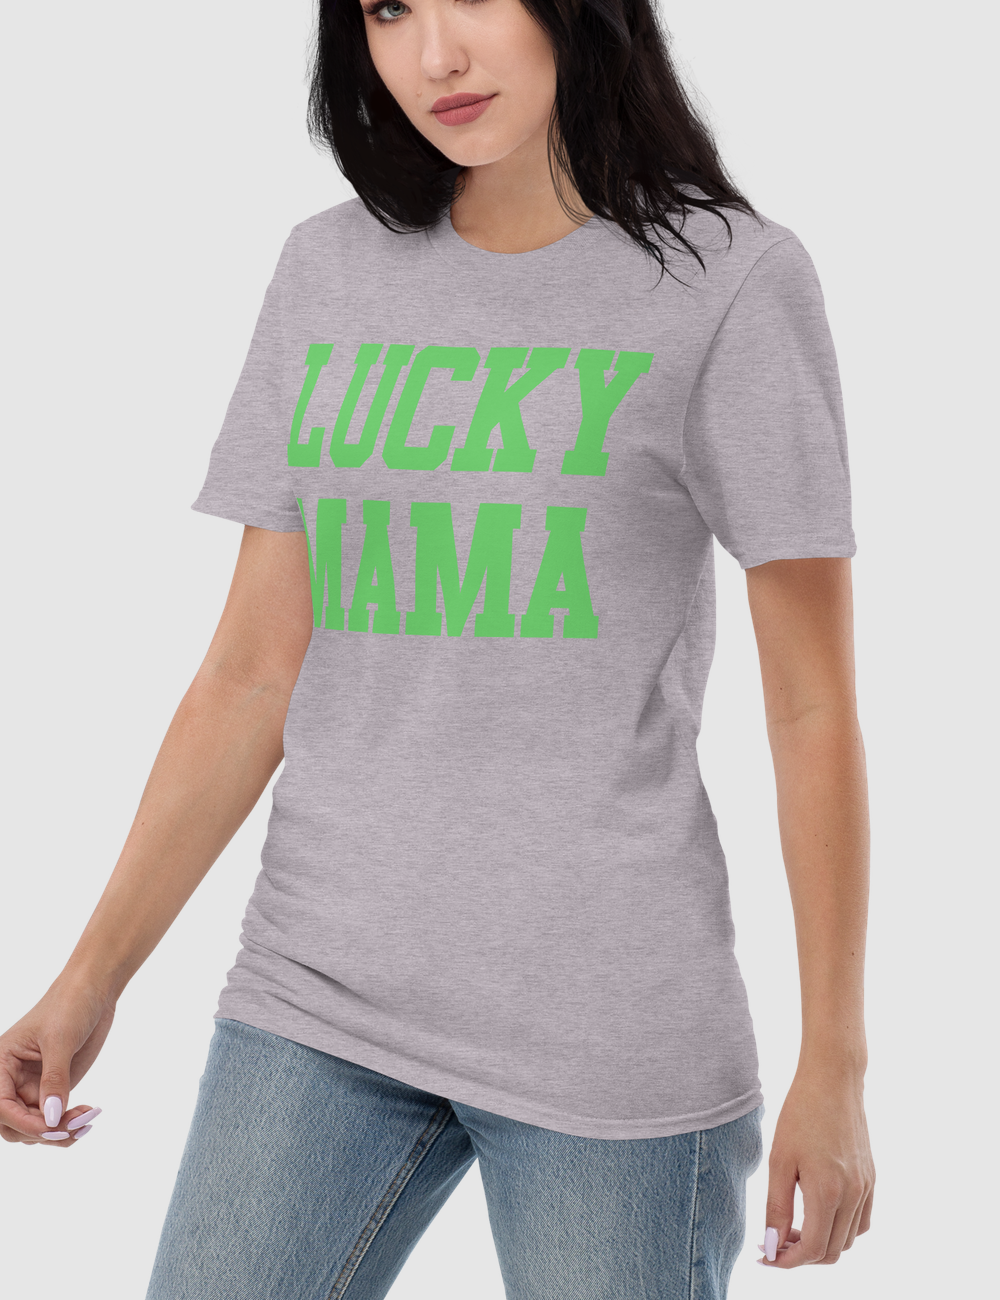 Lucky Mama Women's Relaxed T-Shirt OniTakai